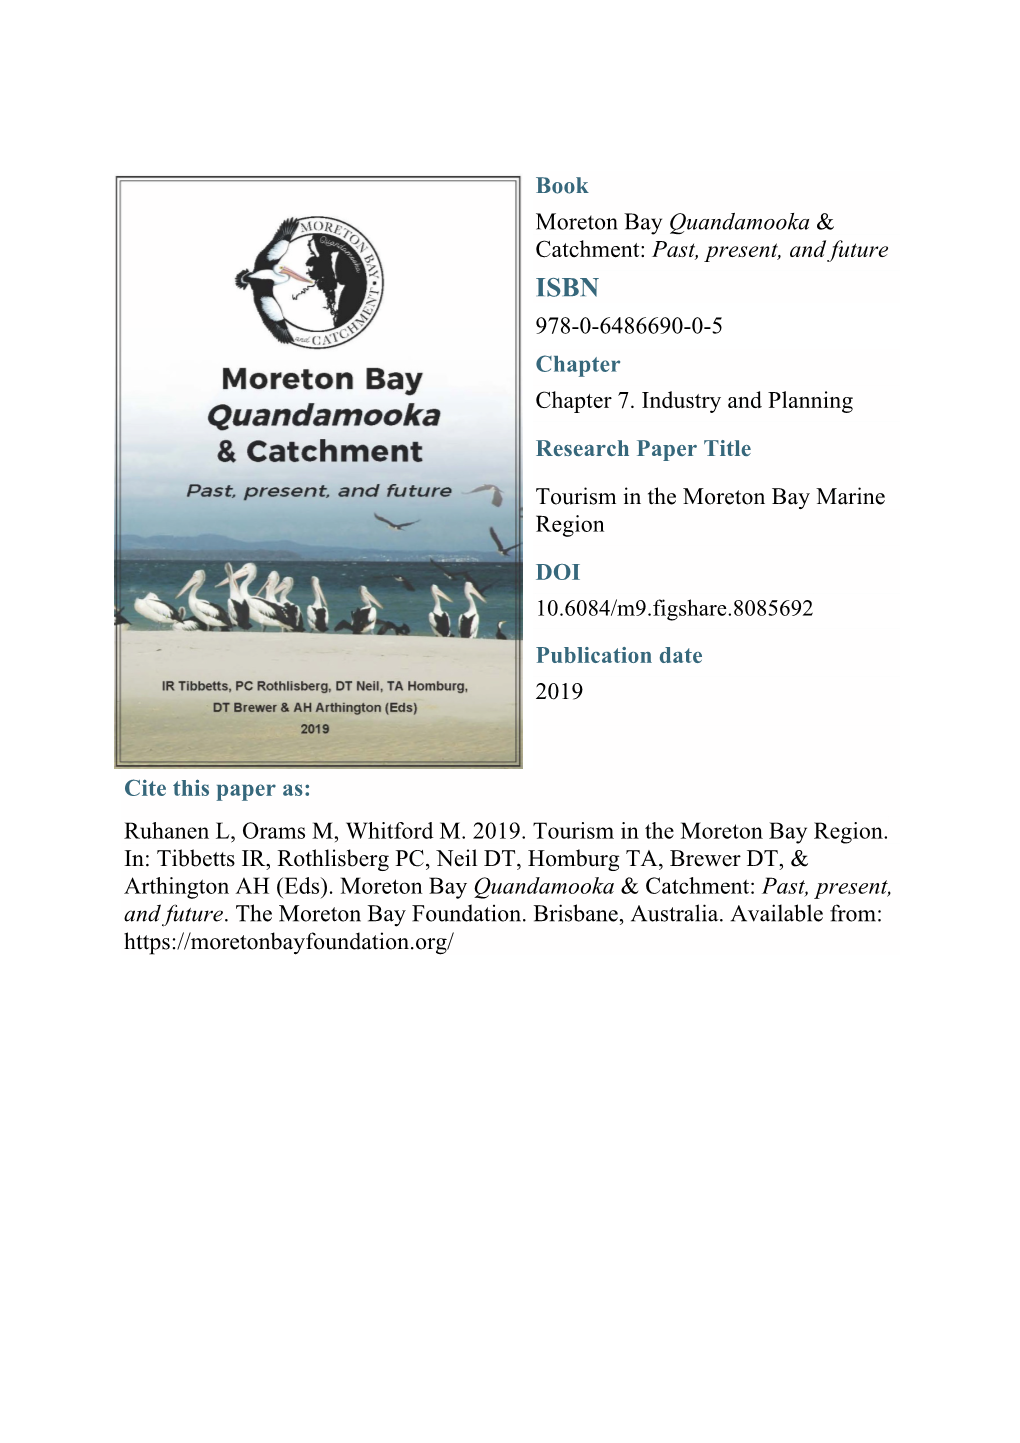 Book Moreton Bay Quandamooka & Catchment: Past, Present, And